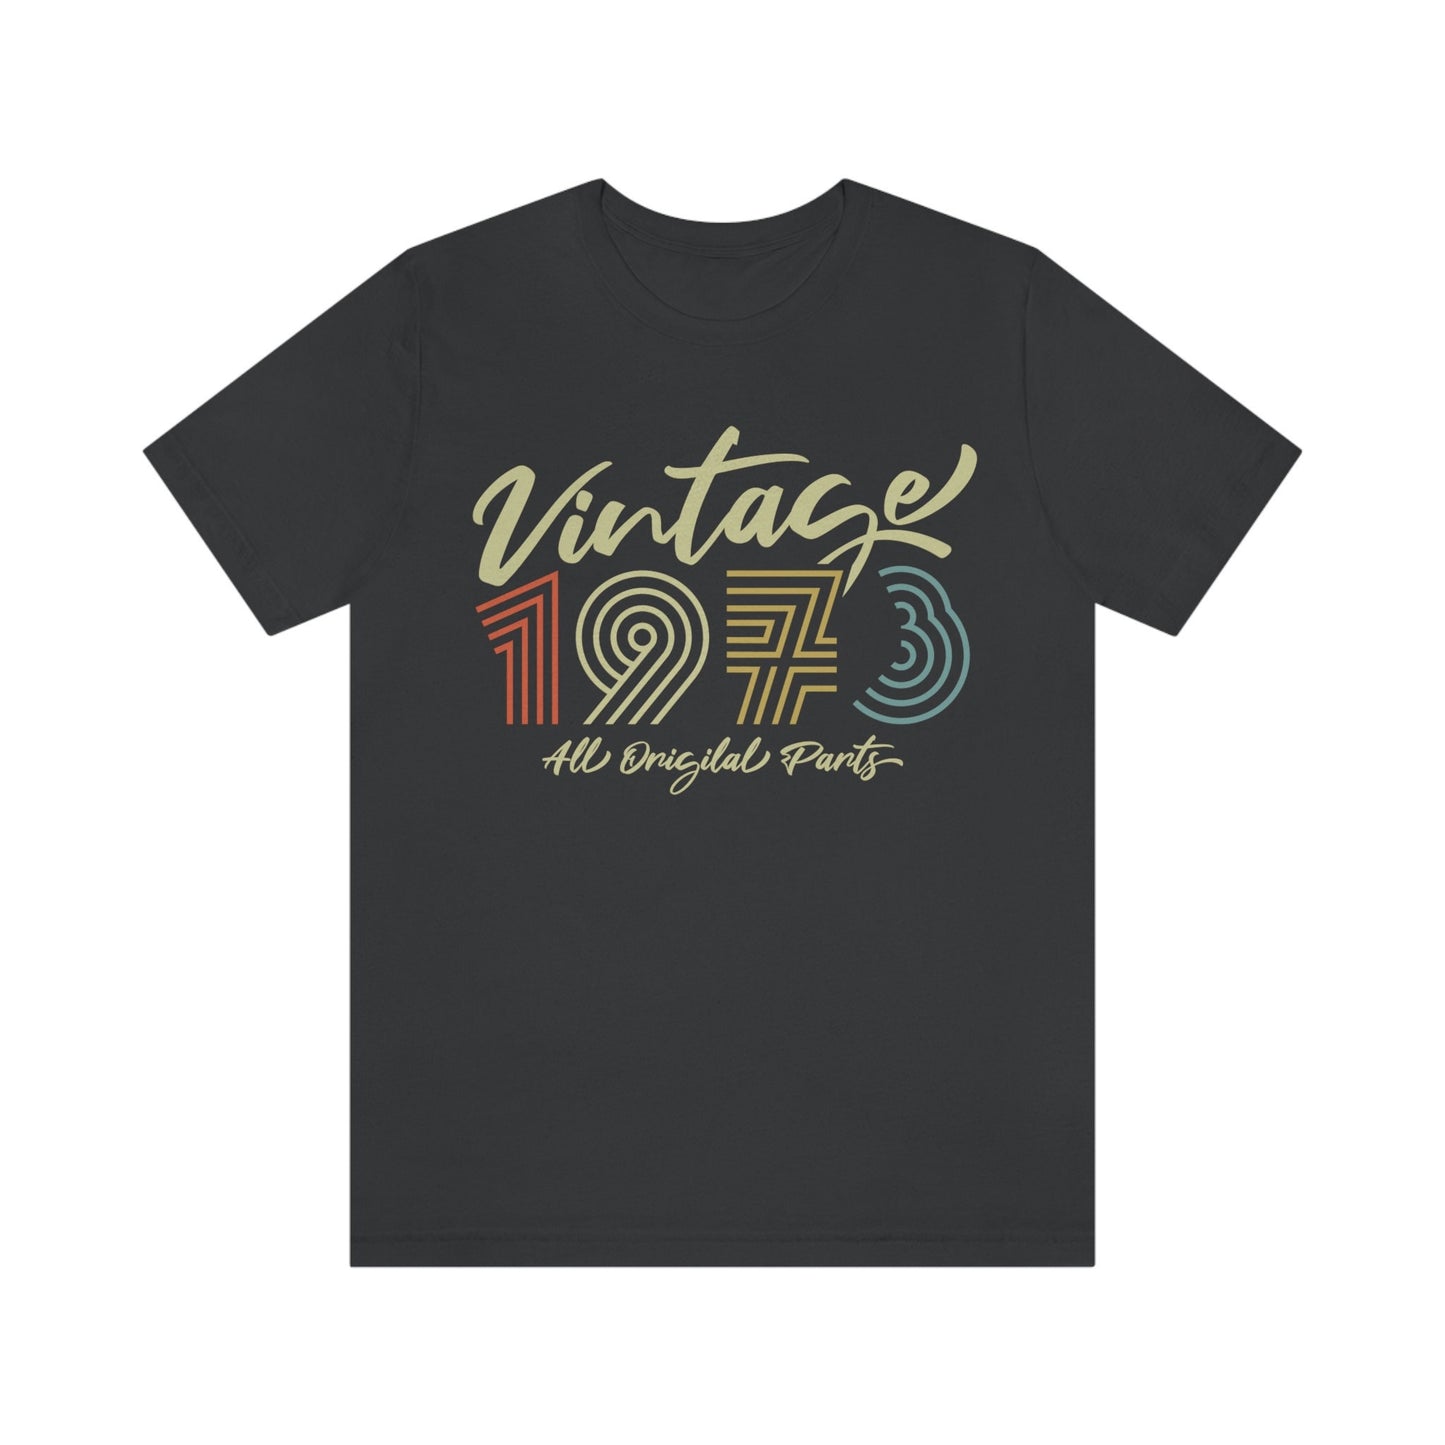 Vintage 1973 Birthday shirt for Women or Men, Retro 1973 gift shirt for wife or husband